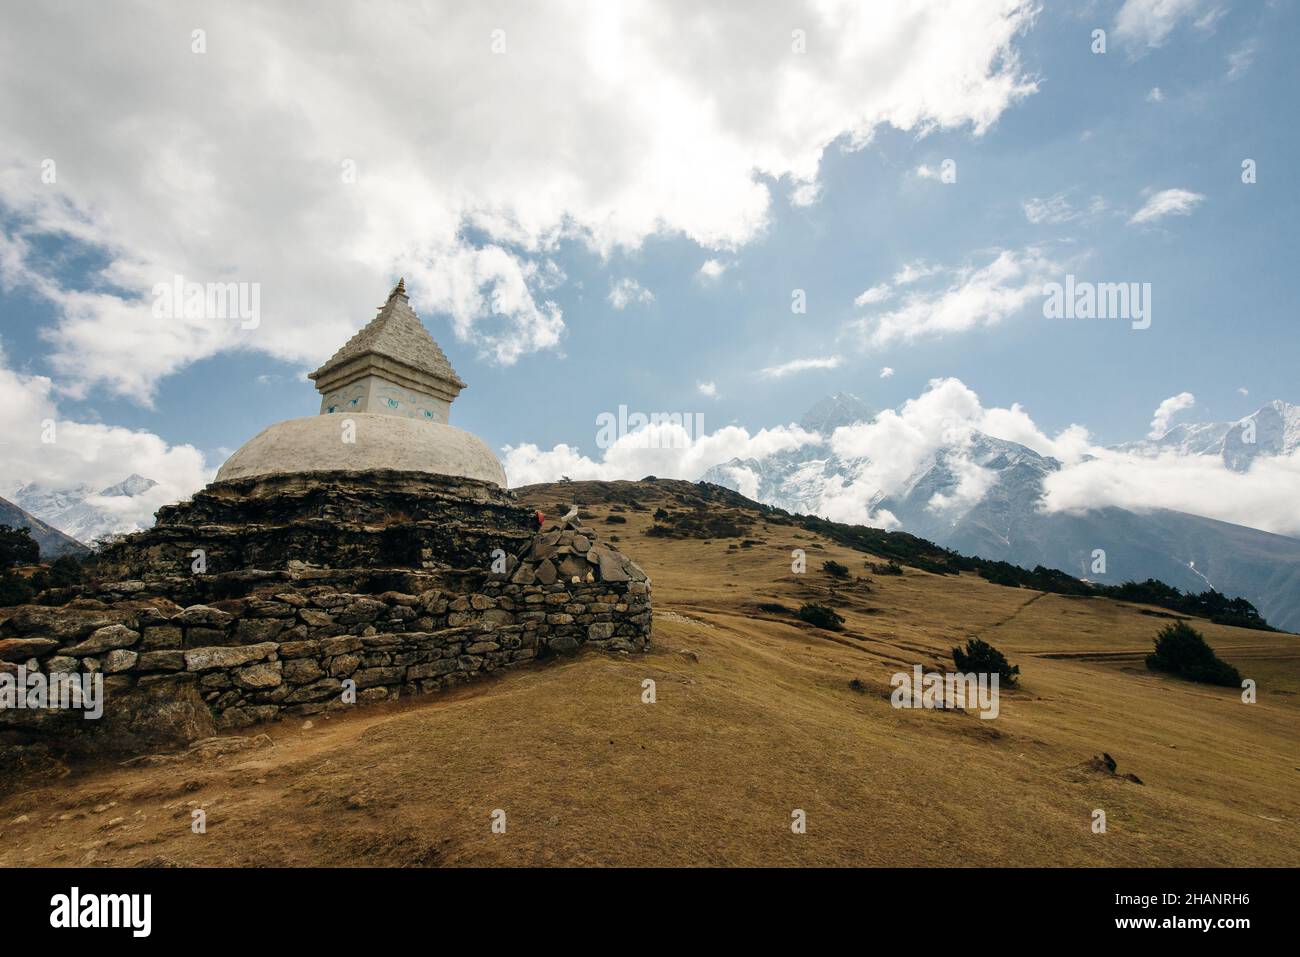 Stupa in der Nähe des Dorfes Dingboche. Weg zum Mount Everest Base Camp - Khumbu Valley - Nepal - okt, 2021. Hochwertige Fotos Stockfoto